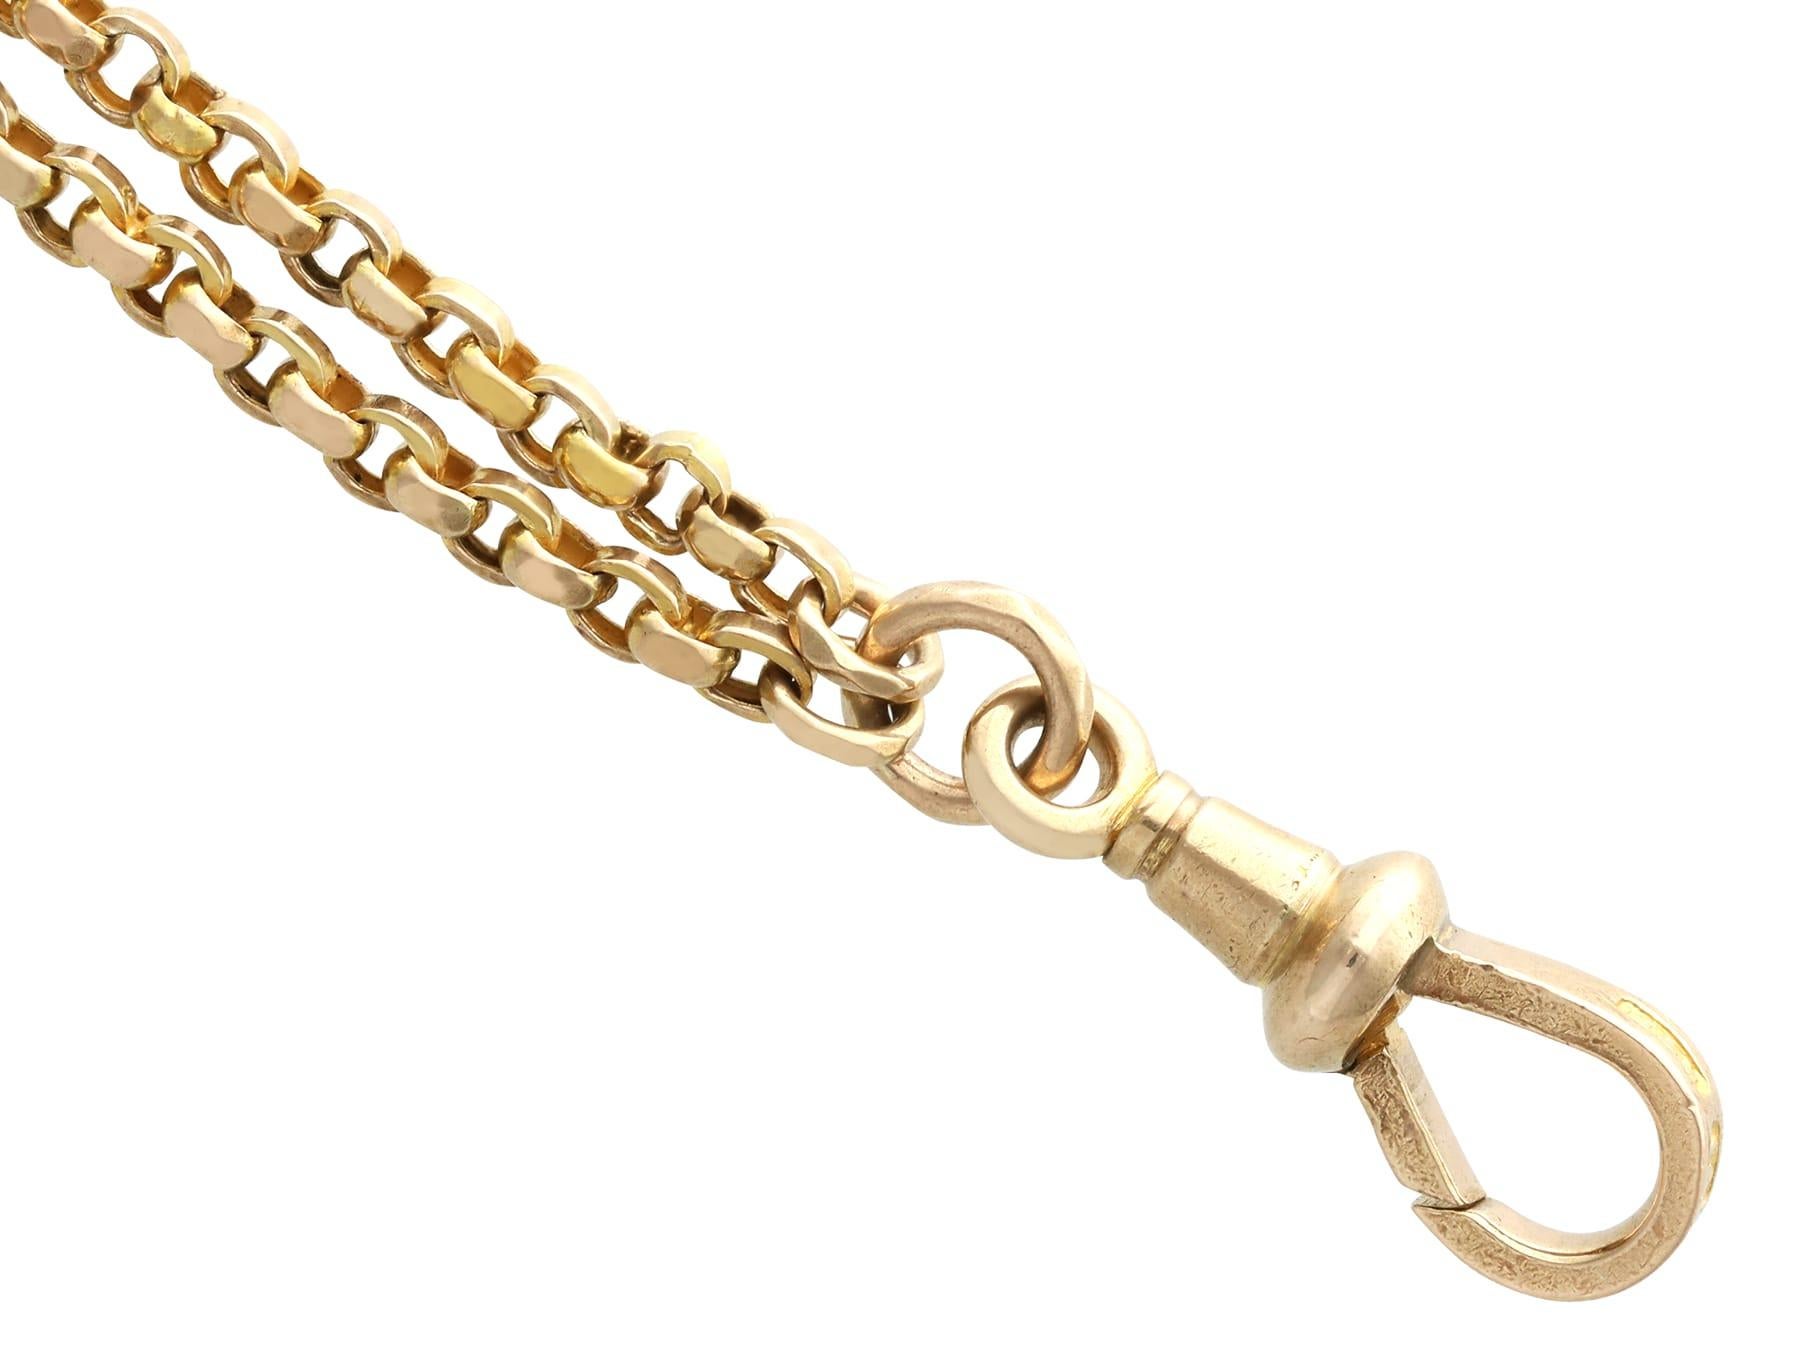 Antique 9 Carat Yellow Gold Longuard Chain - Circa 1890 For Sale 1